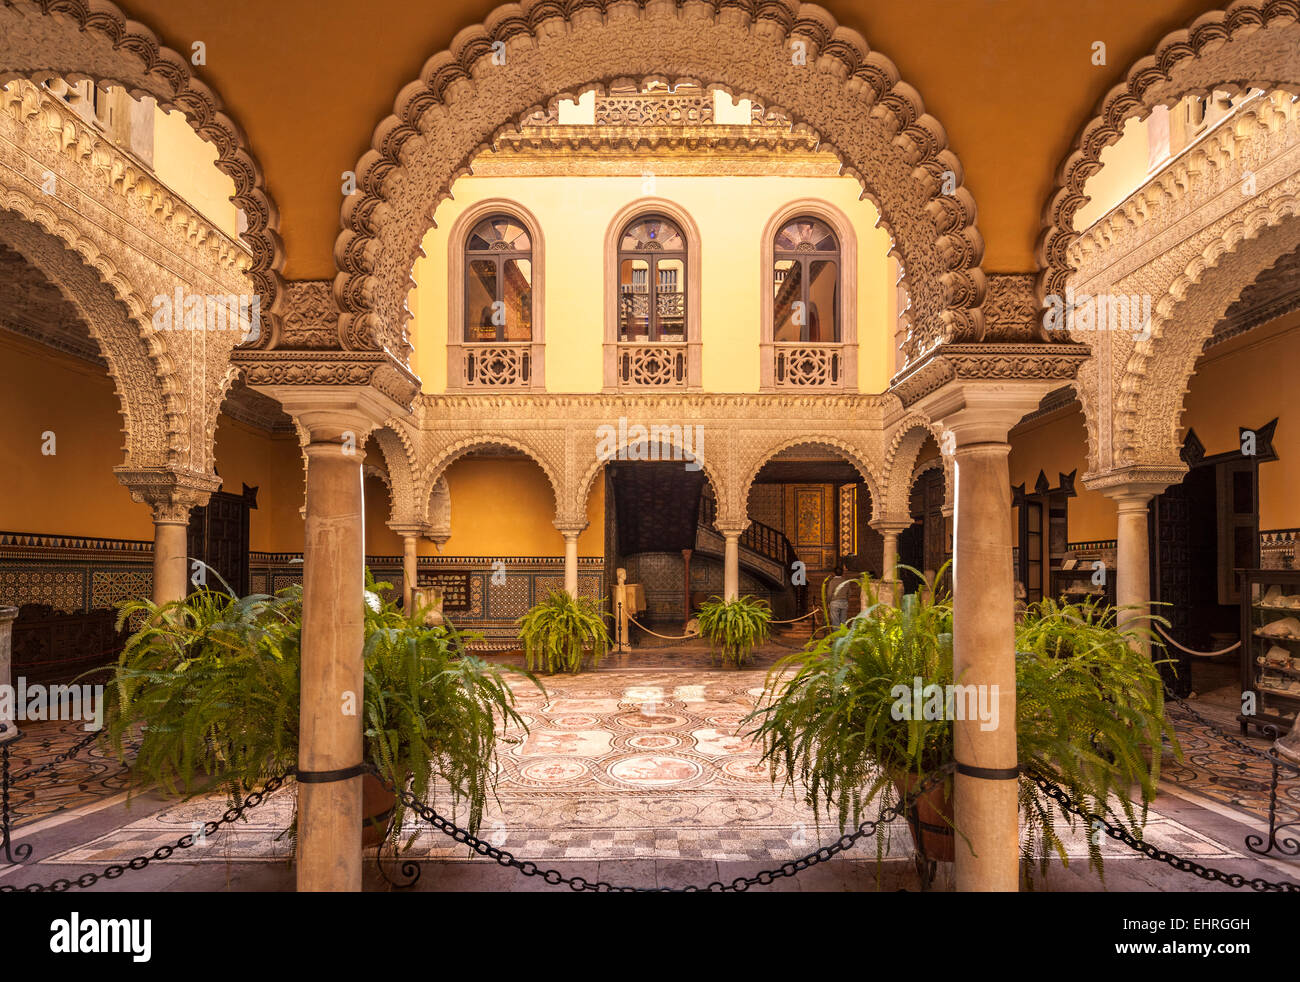 Seville Spain, courtyard with Roman mosaics. Sevilla, Palace of the Countess of Lebrija, Palacio de la Condesa de Lebrija. Stock Photo